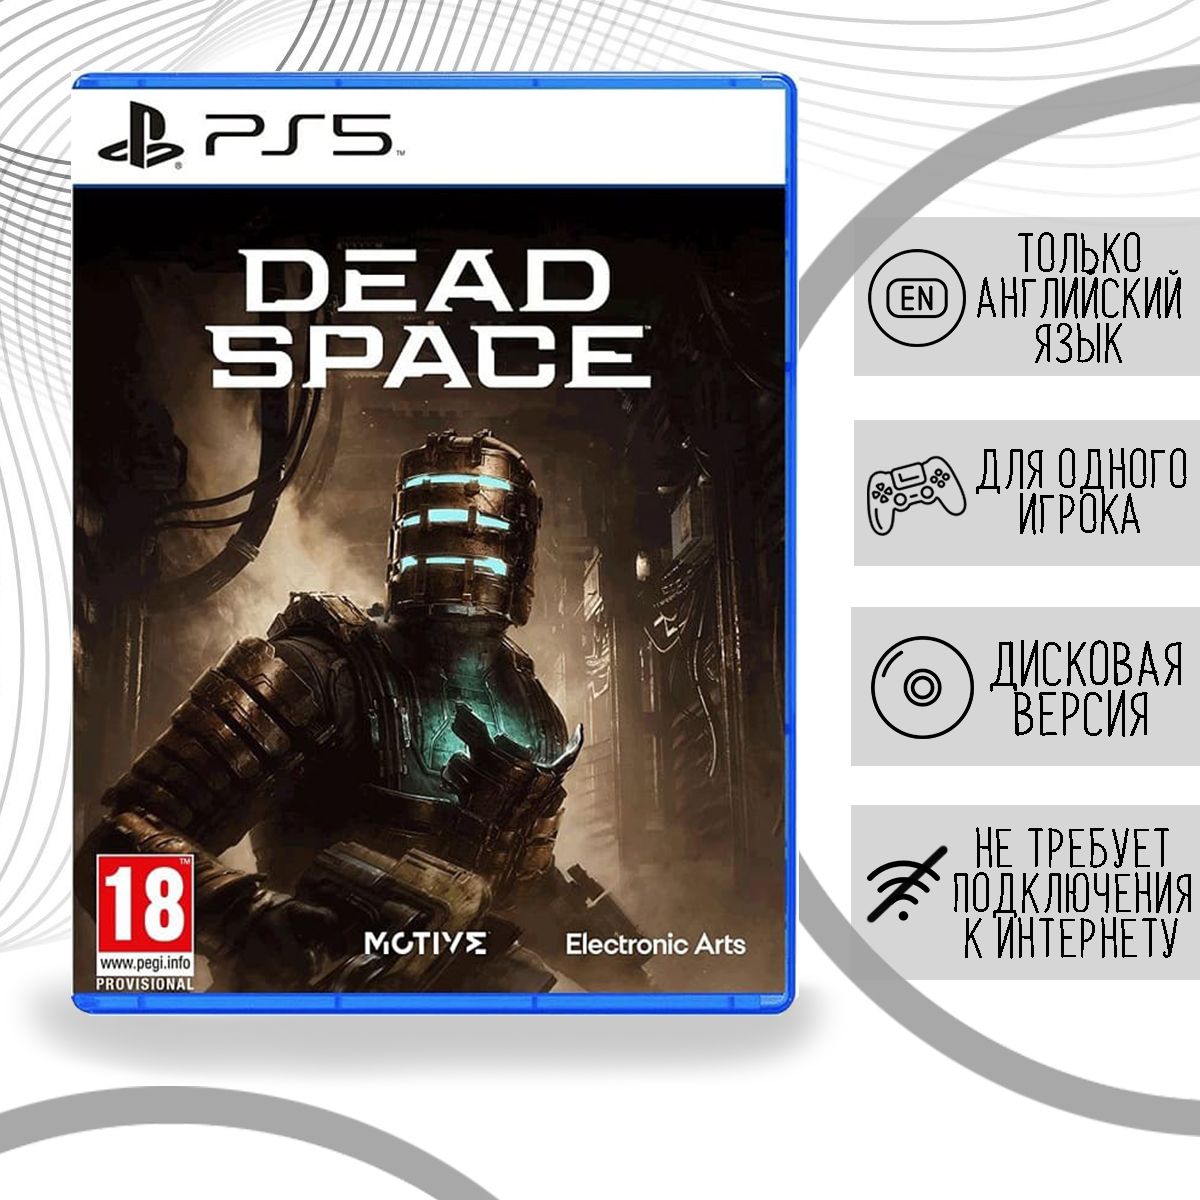 Игра dead space отзывы. Dead Space Remake Xbox. Dead Space Remake ps5. Dead Space Remake купить.